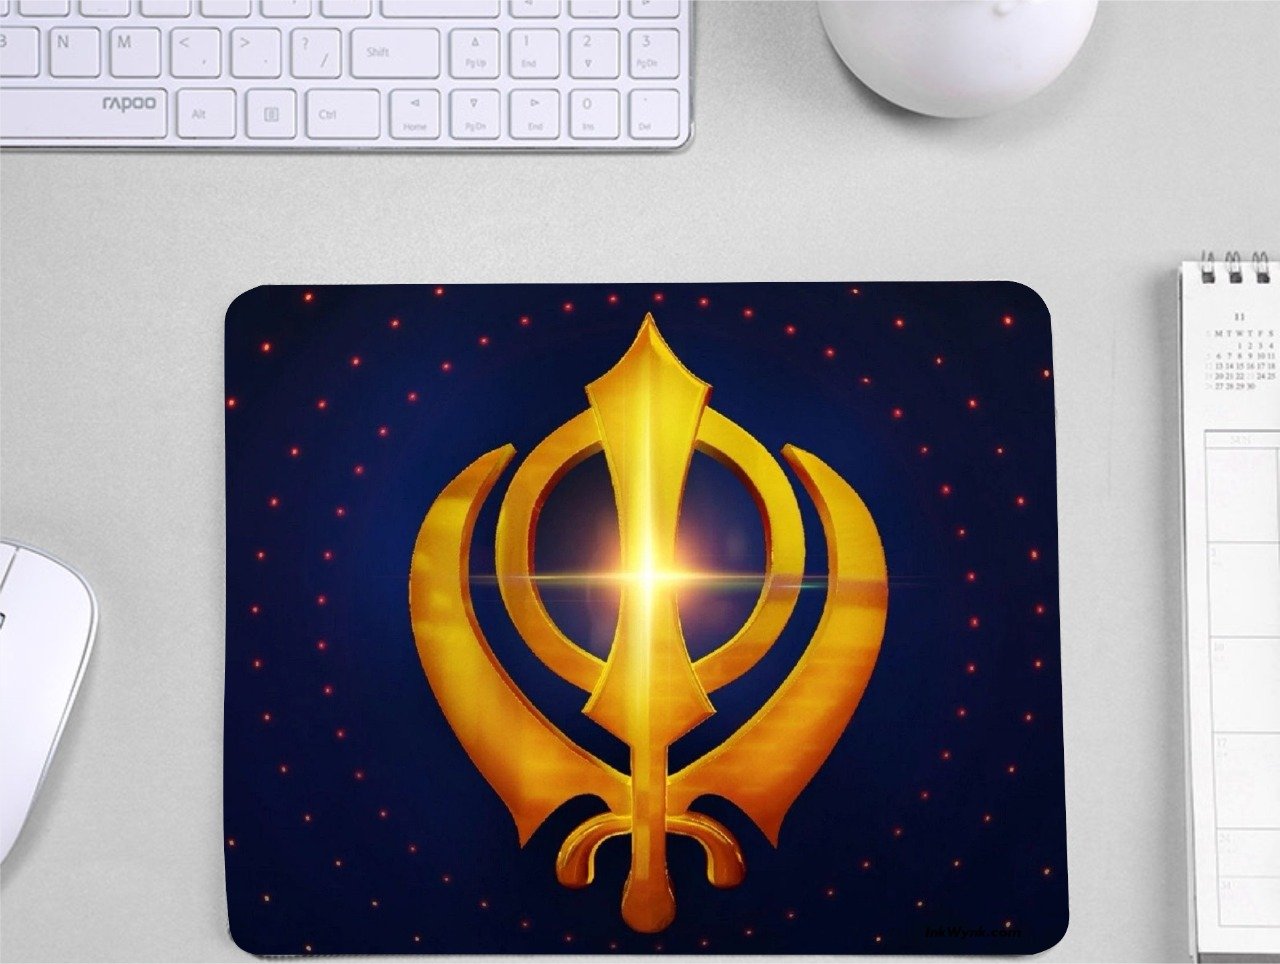 Khanda (Sikh Symbol) Mouse Pad for Home